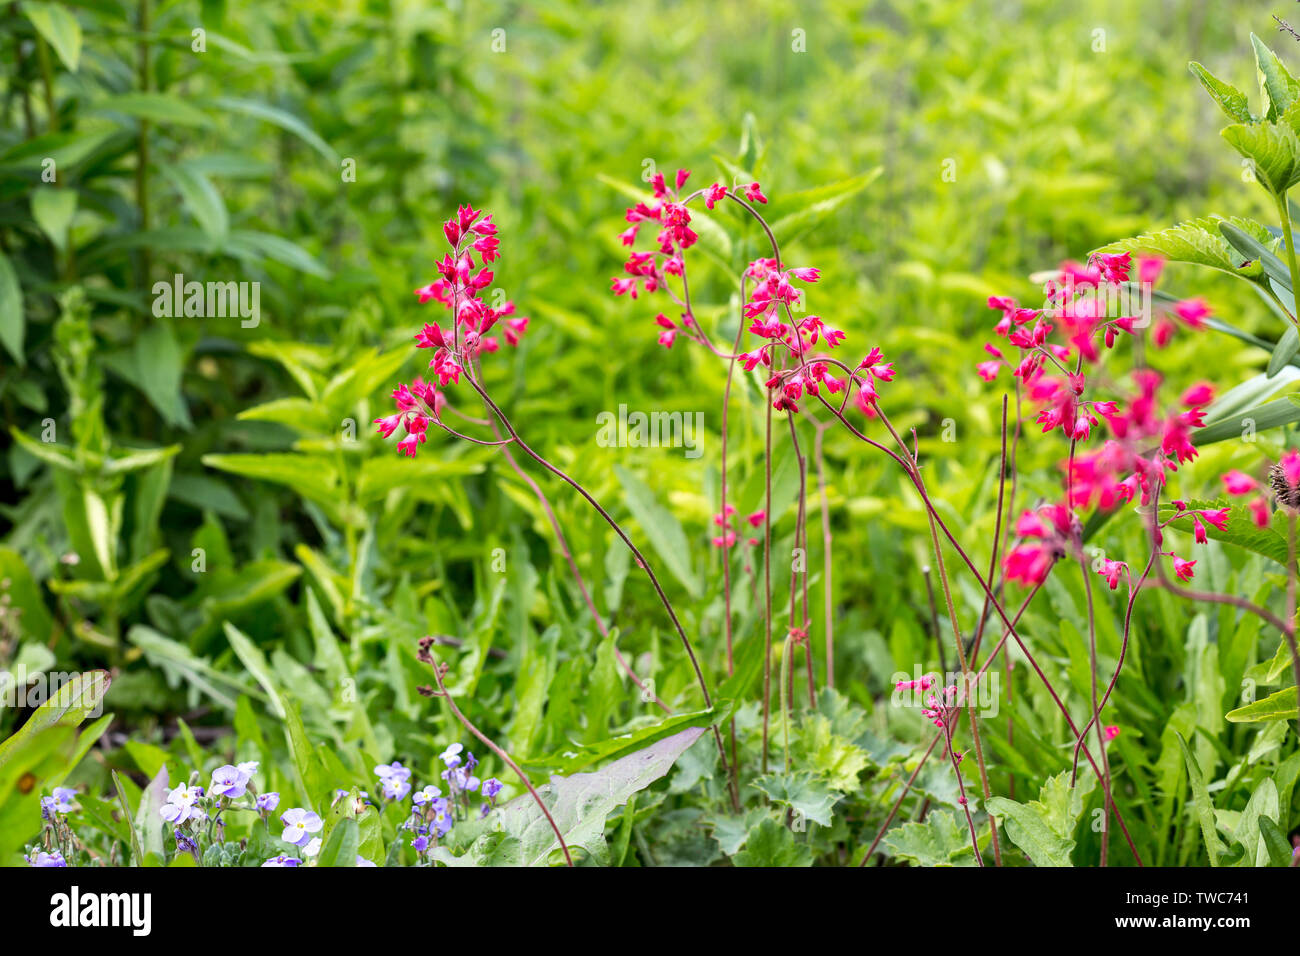 Pink Heuchera flowers in a garden, Germany Stock Photo